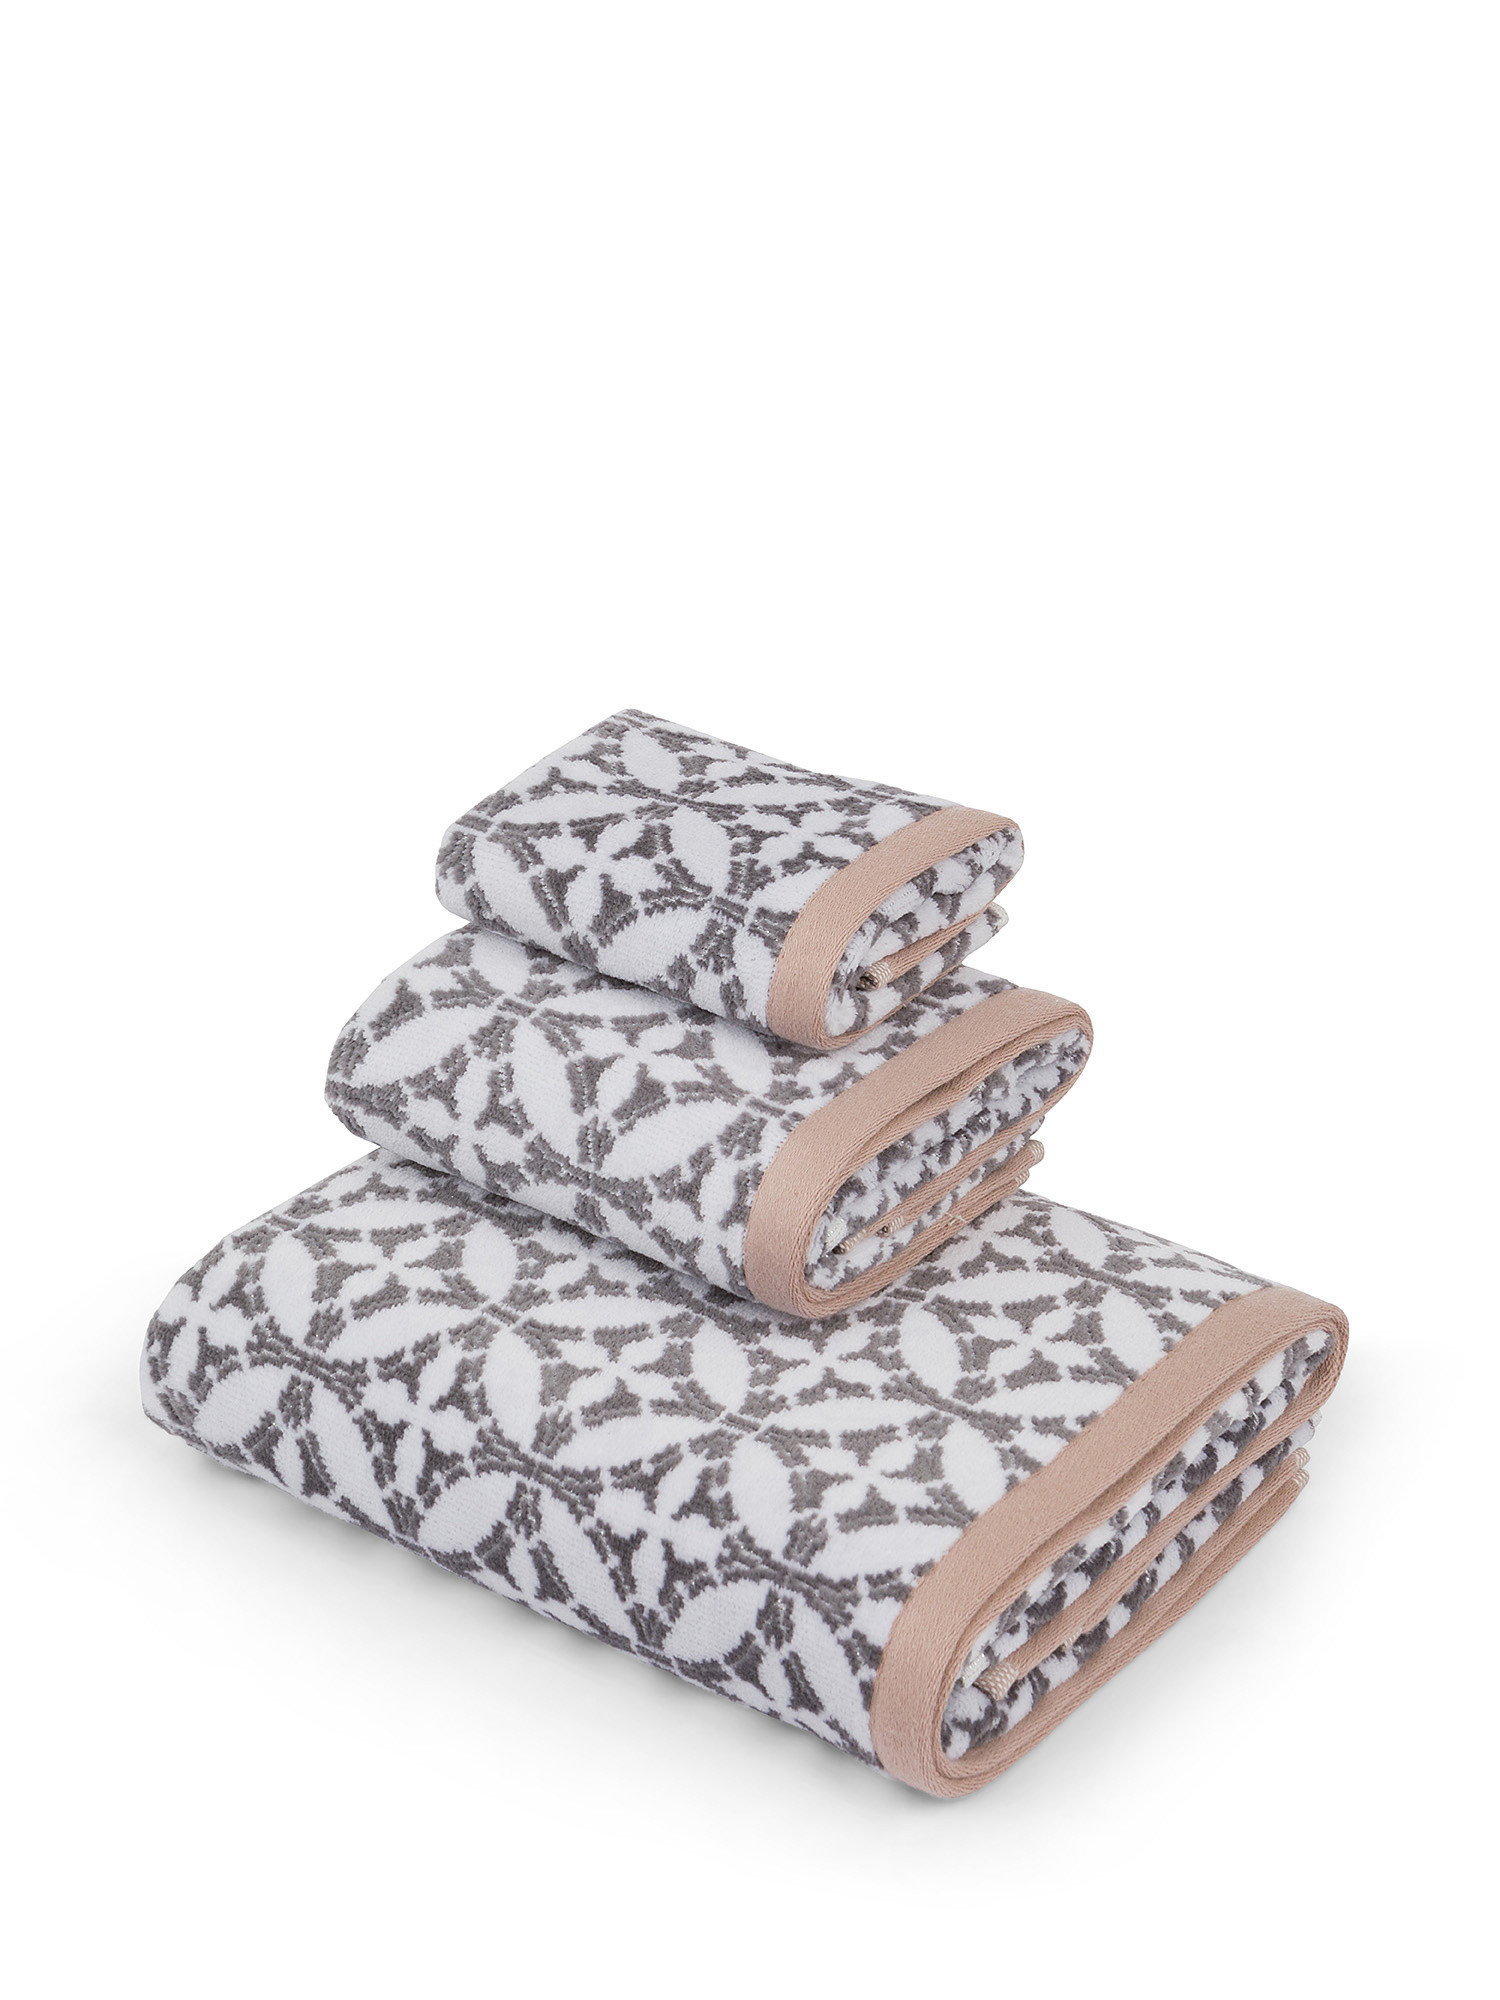 Portofino cotton velor towel with geometric pattern, White / Grey, large image number 0